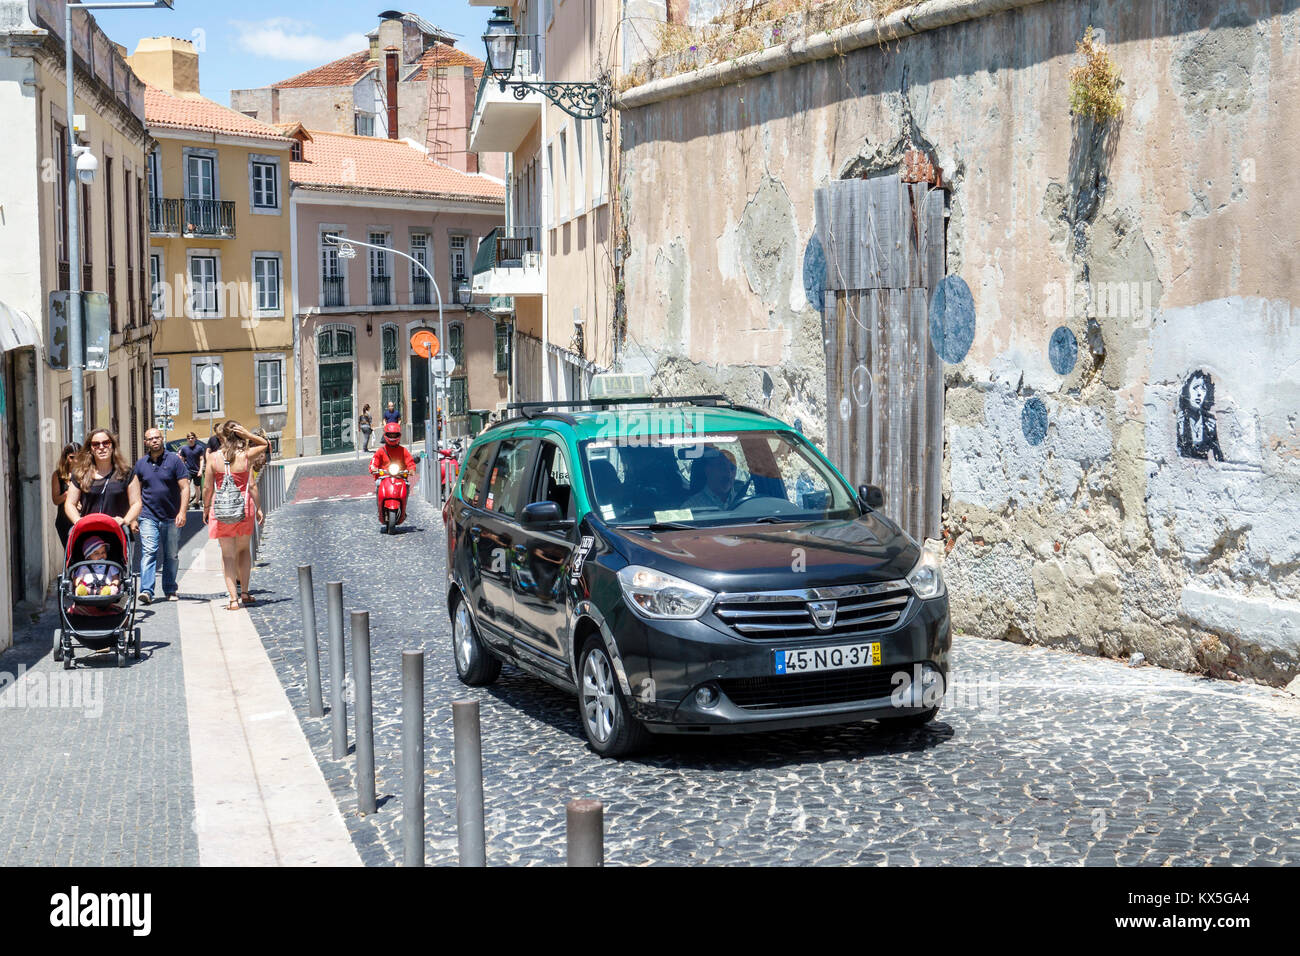 Lisbon Portugal,Castelo quarter,Costa do Castelo,inclined,uphill,sidewalk,taxi,woman female women,stroller,pedestrian,walking,cobblestone,Hispanic,imm Stock Photo